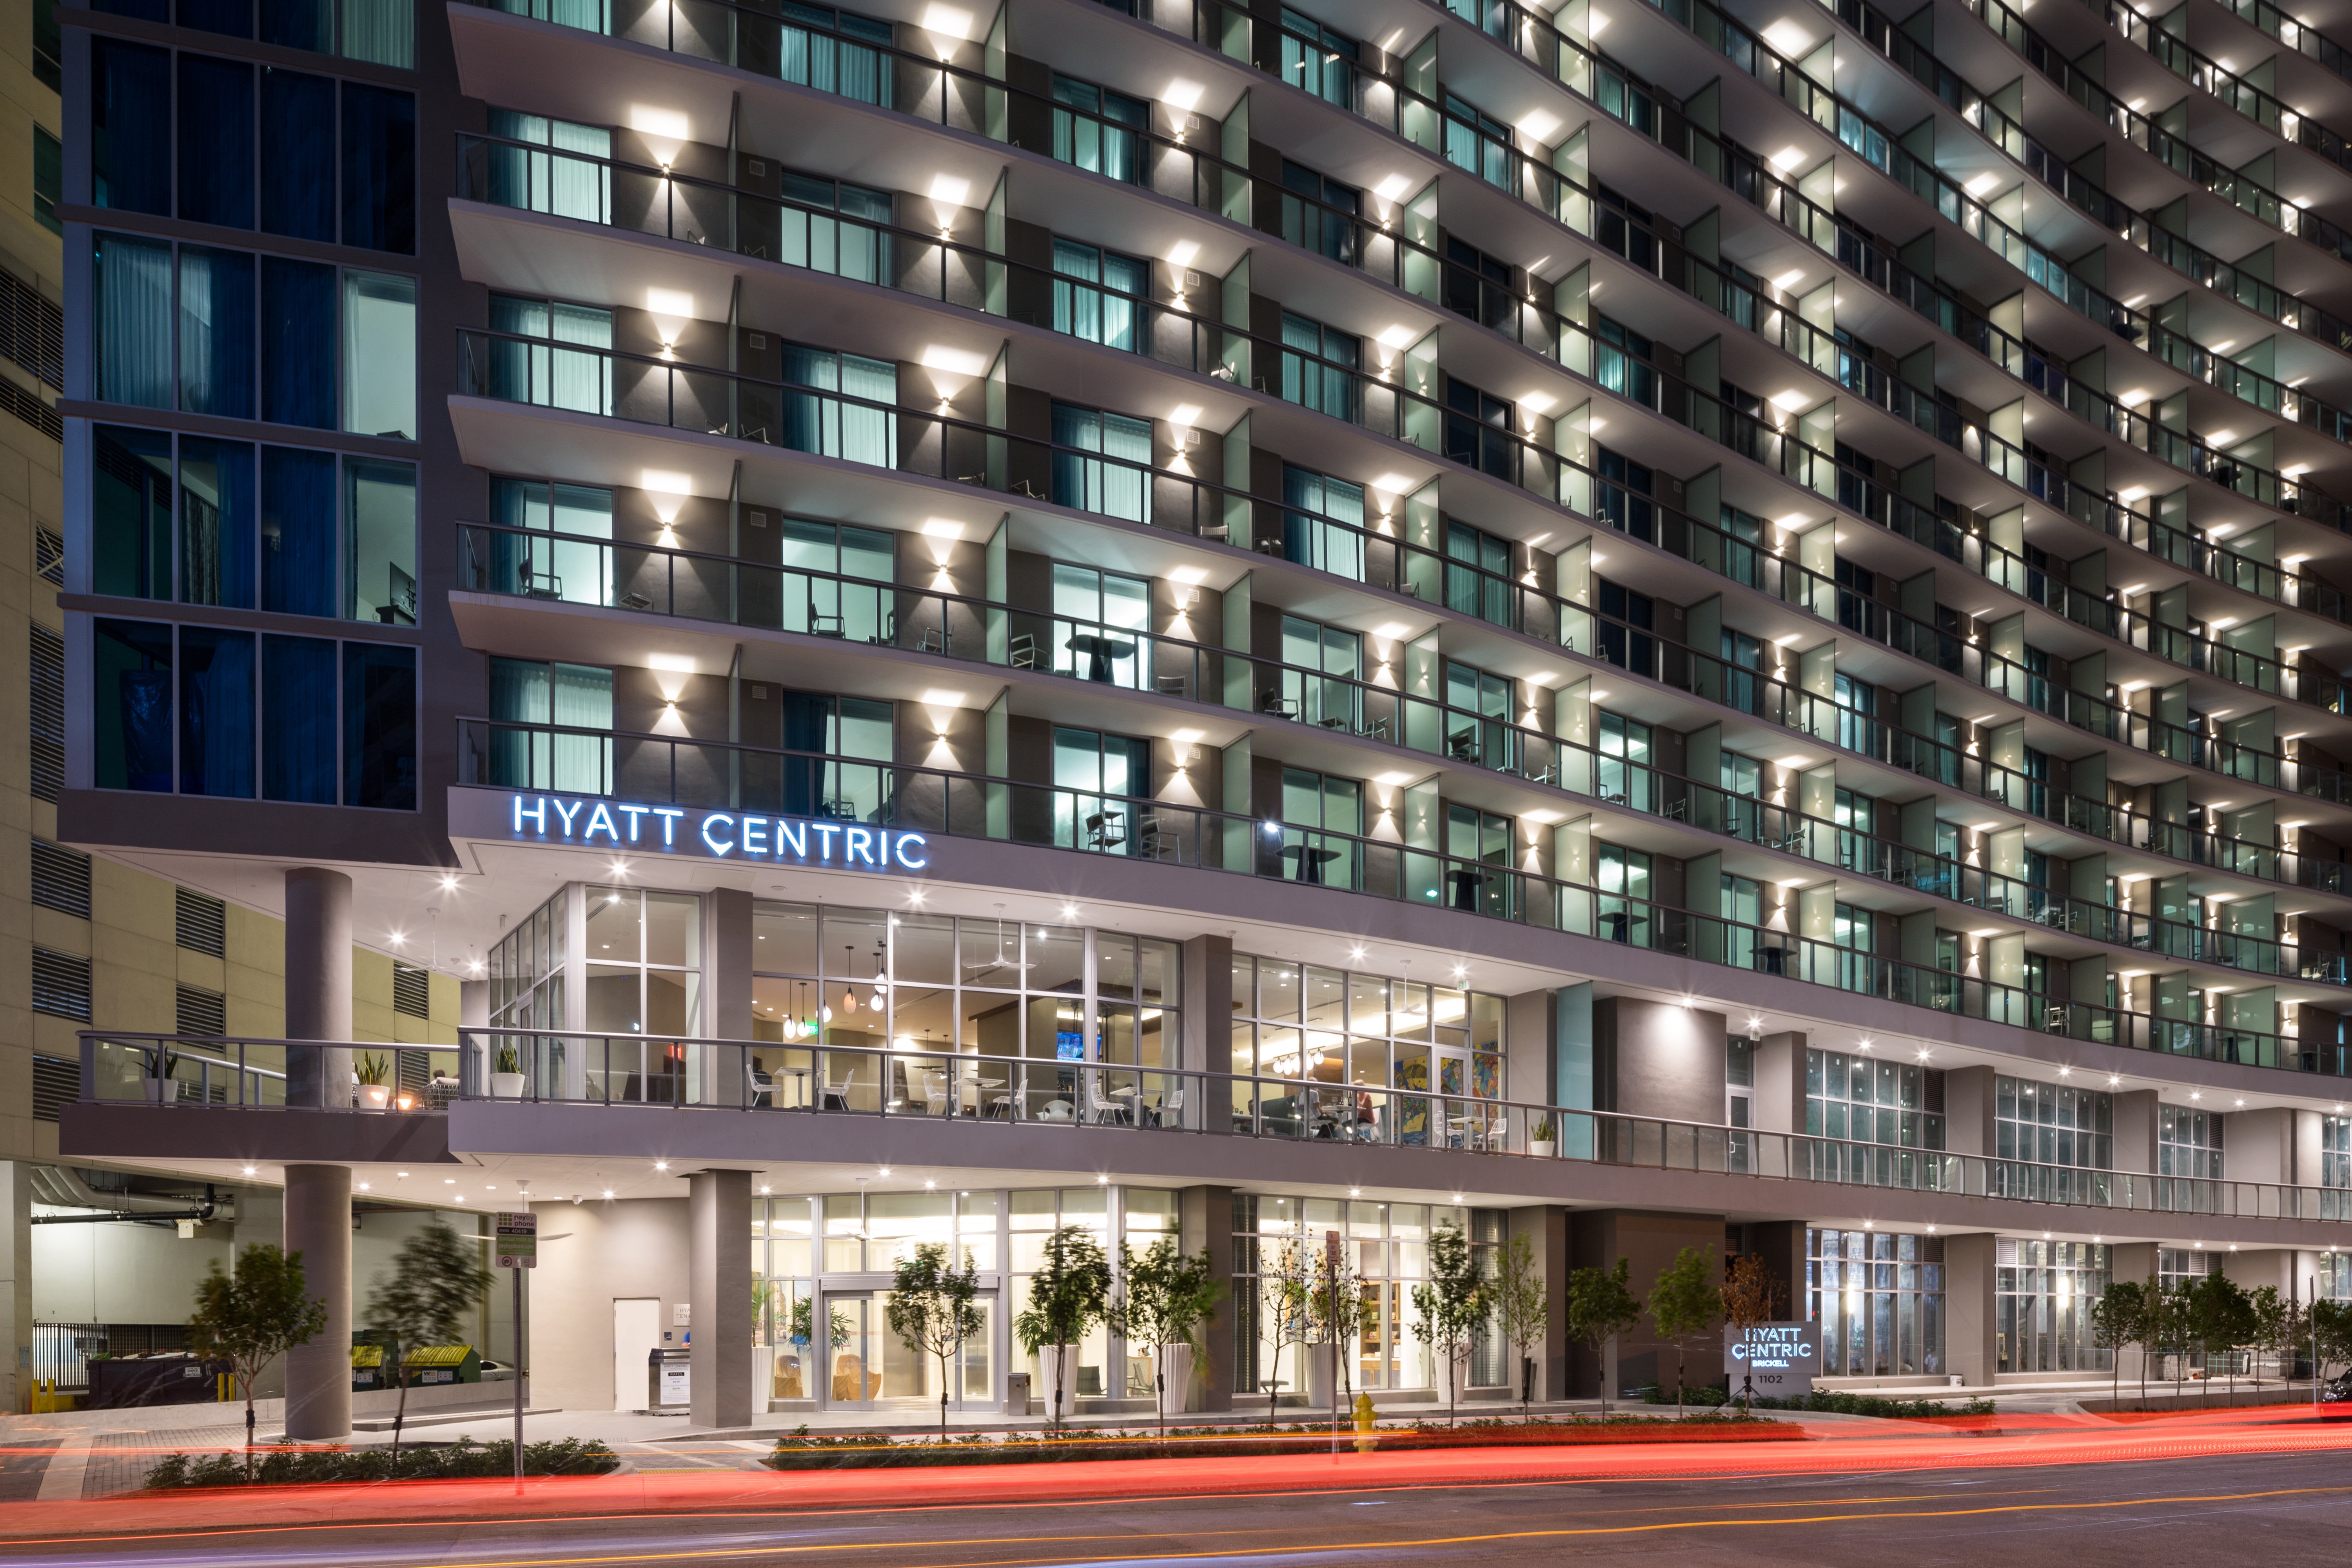 Hyatt Hotels has opened the Hyatt Centric Brickell Miami in the Brickell Financial District